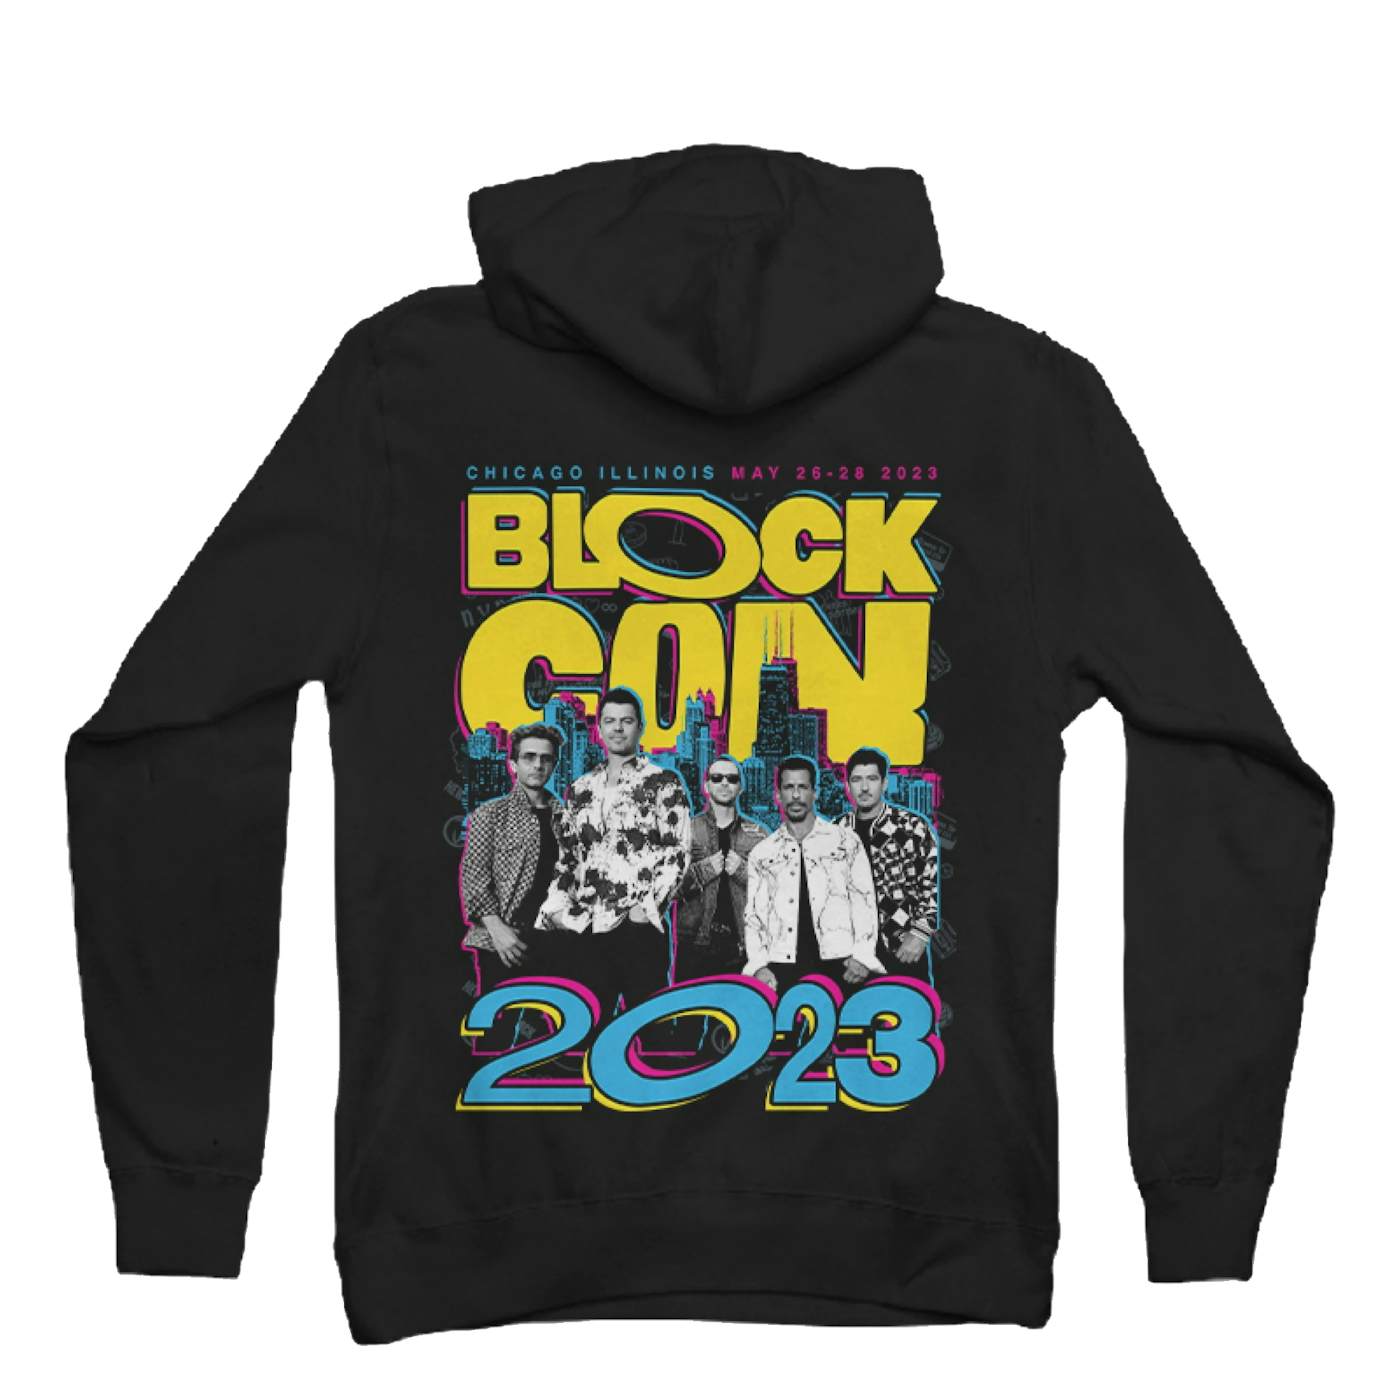 New Kids On The Block BLOCKCON 2023 Zip Hoodie